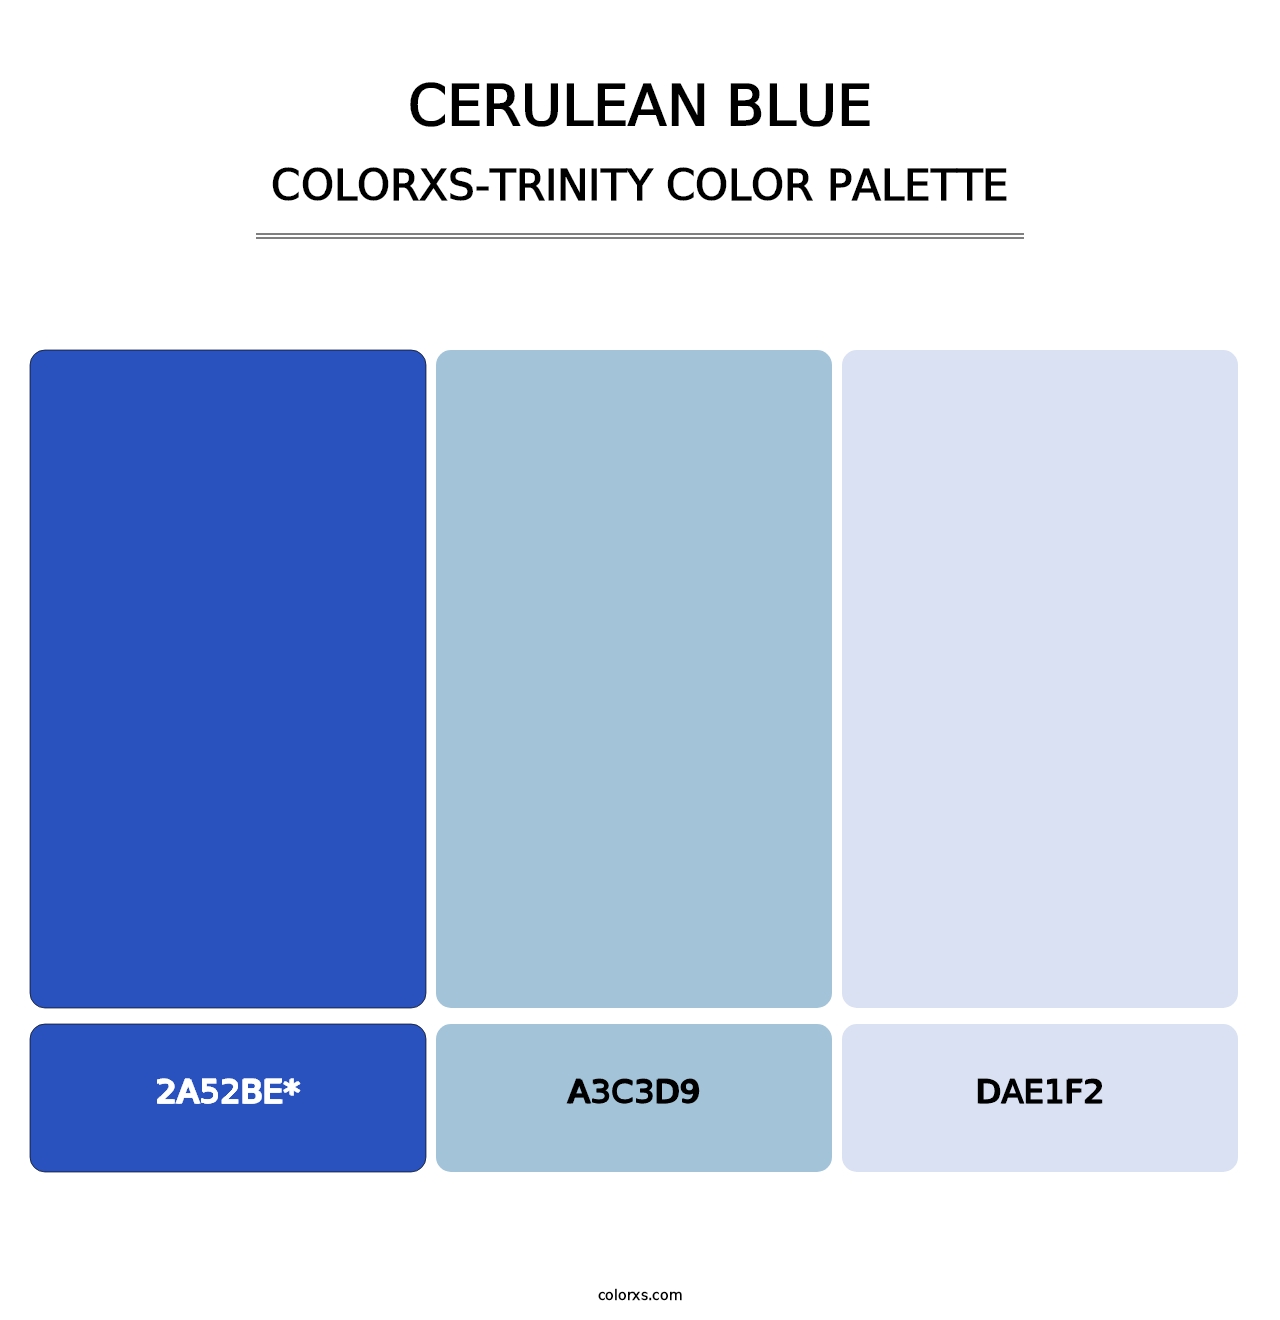 Cerulean blue - Colorxs Trinity Palette